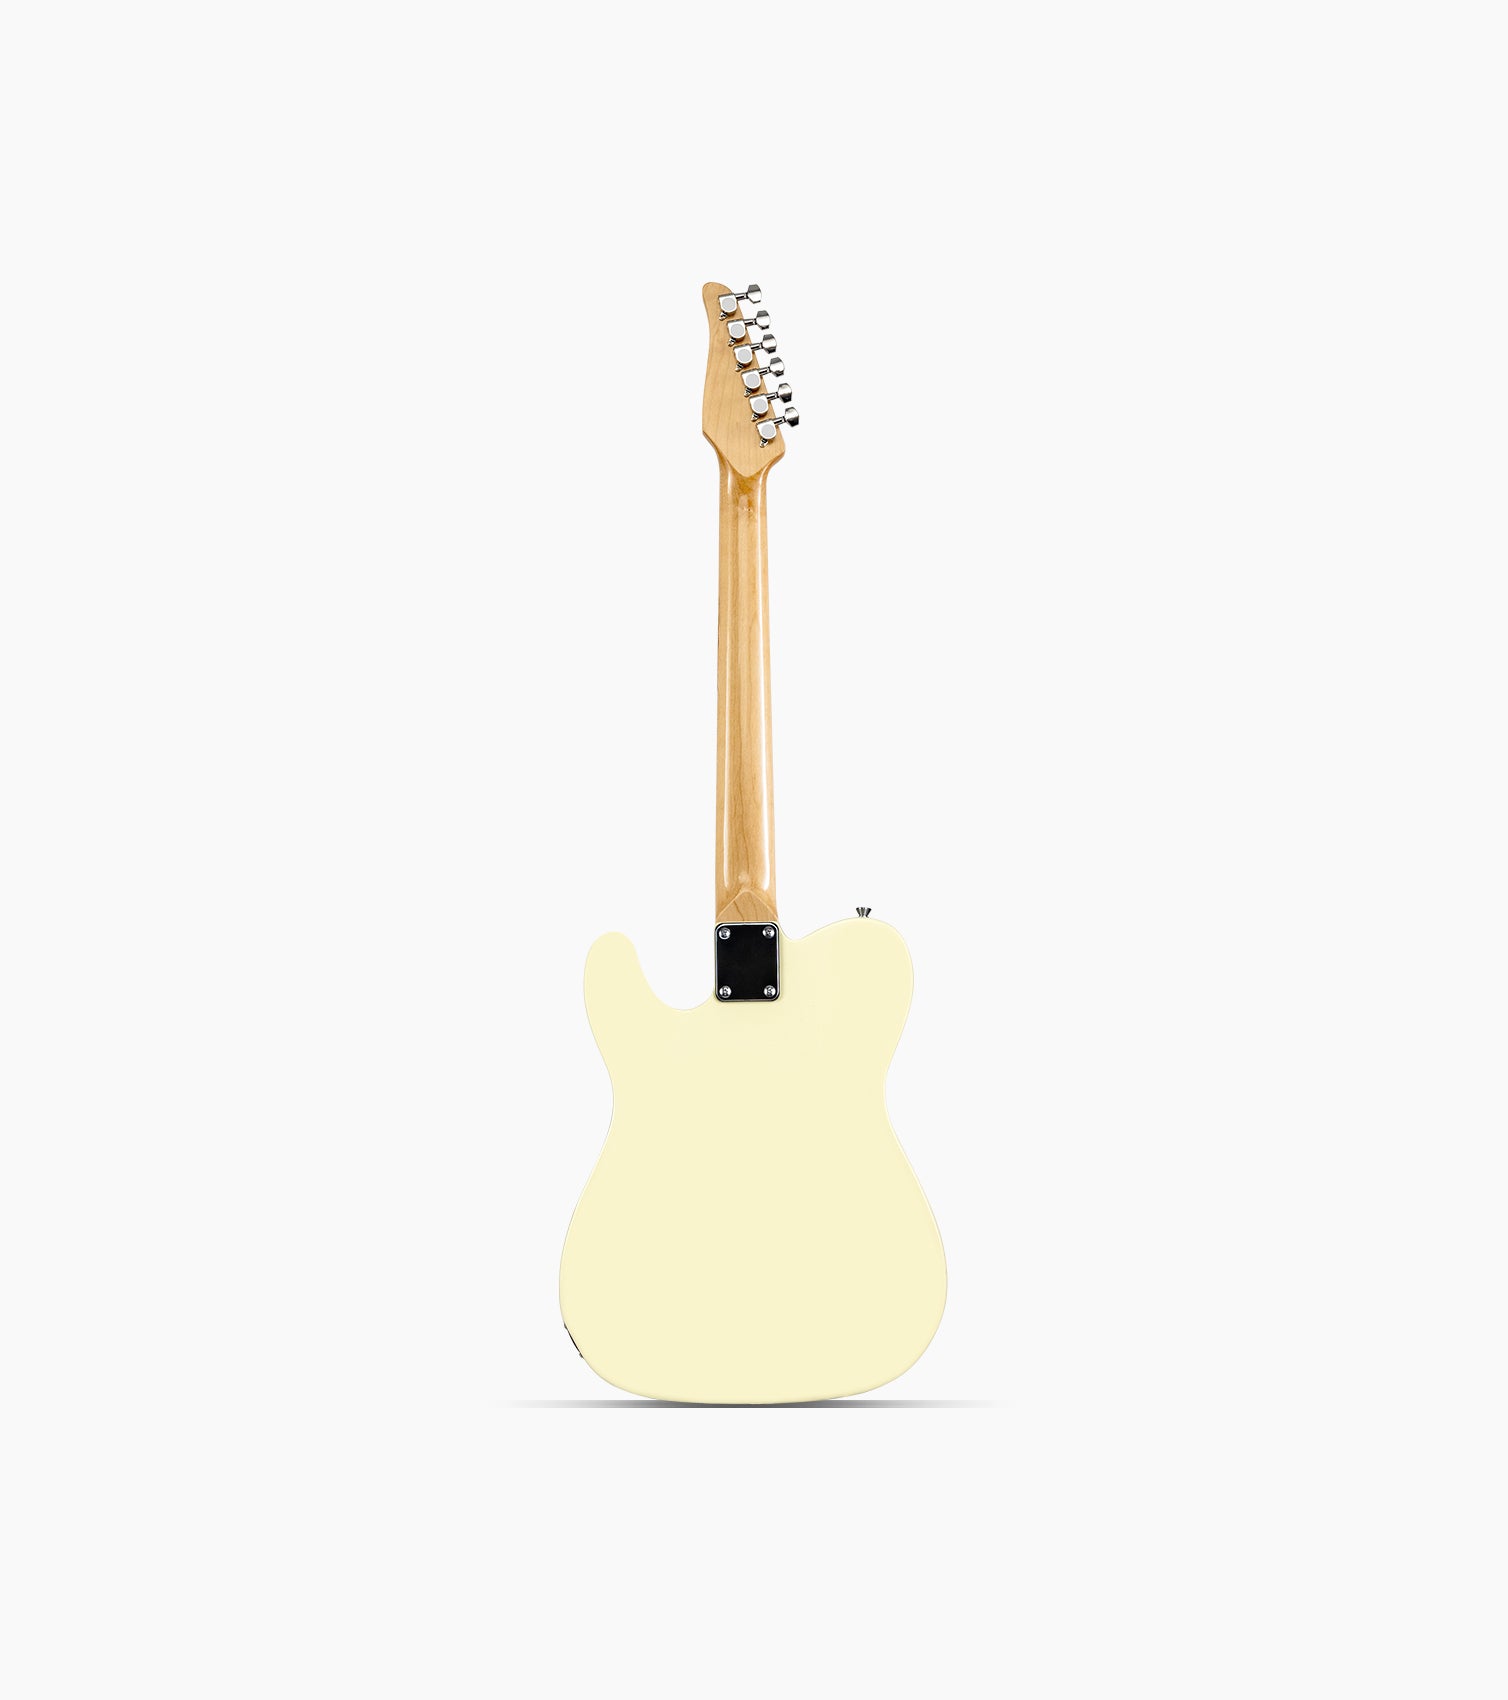 30 inch Telecaster Electric Guitar Cream White - Back